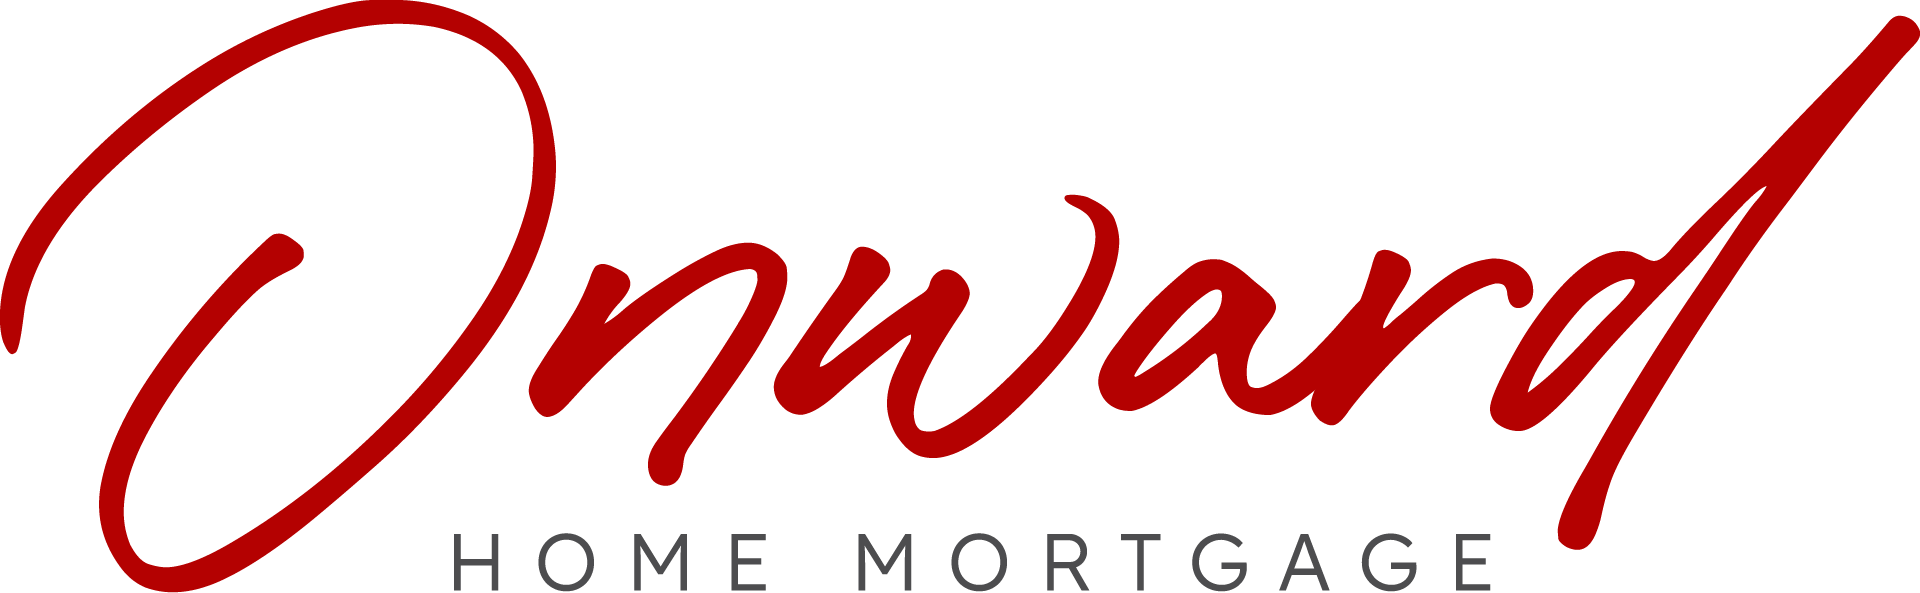 Onward Home Mortgage logo